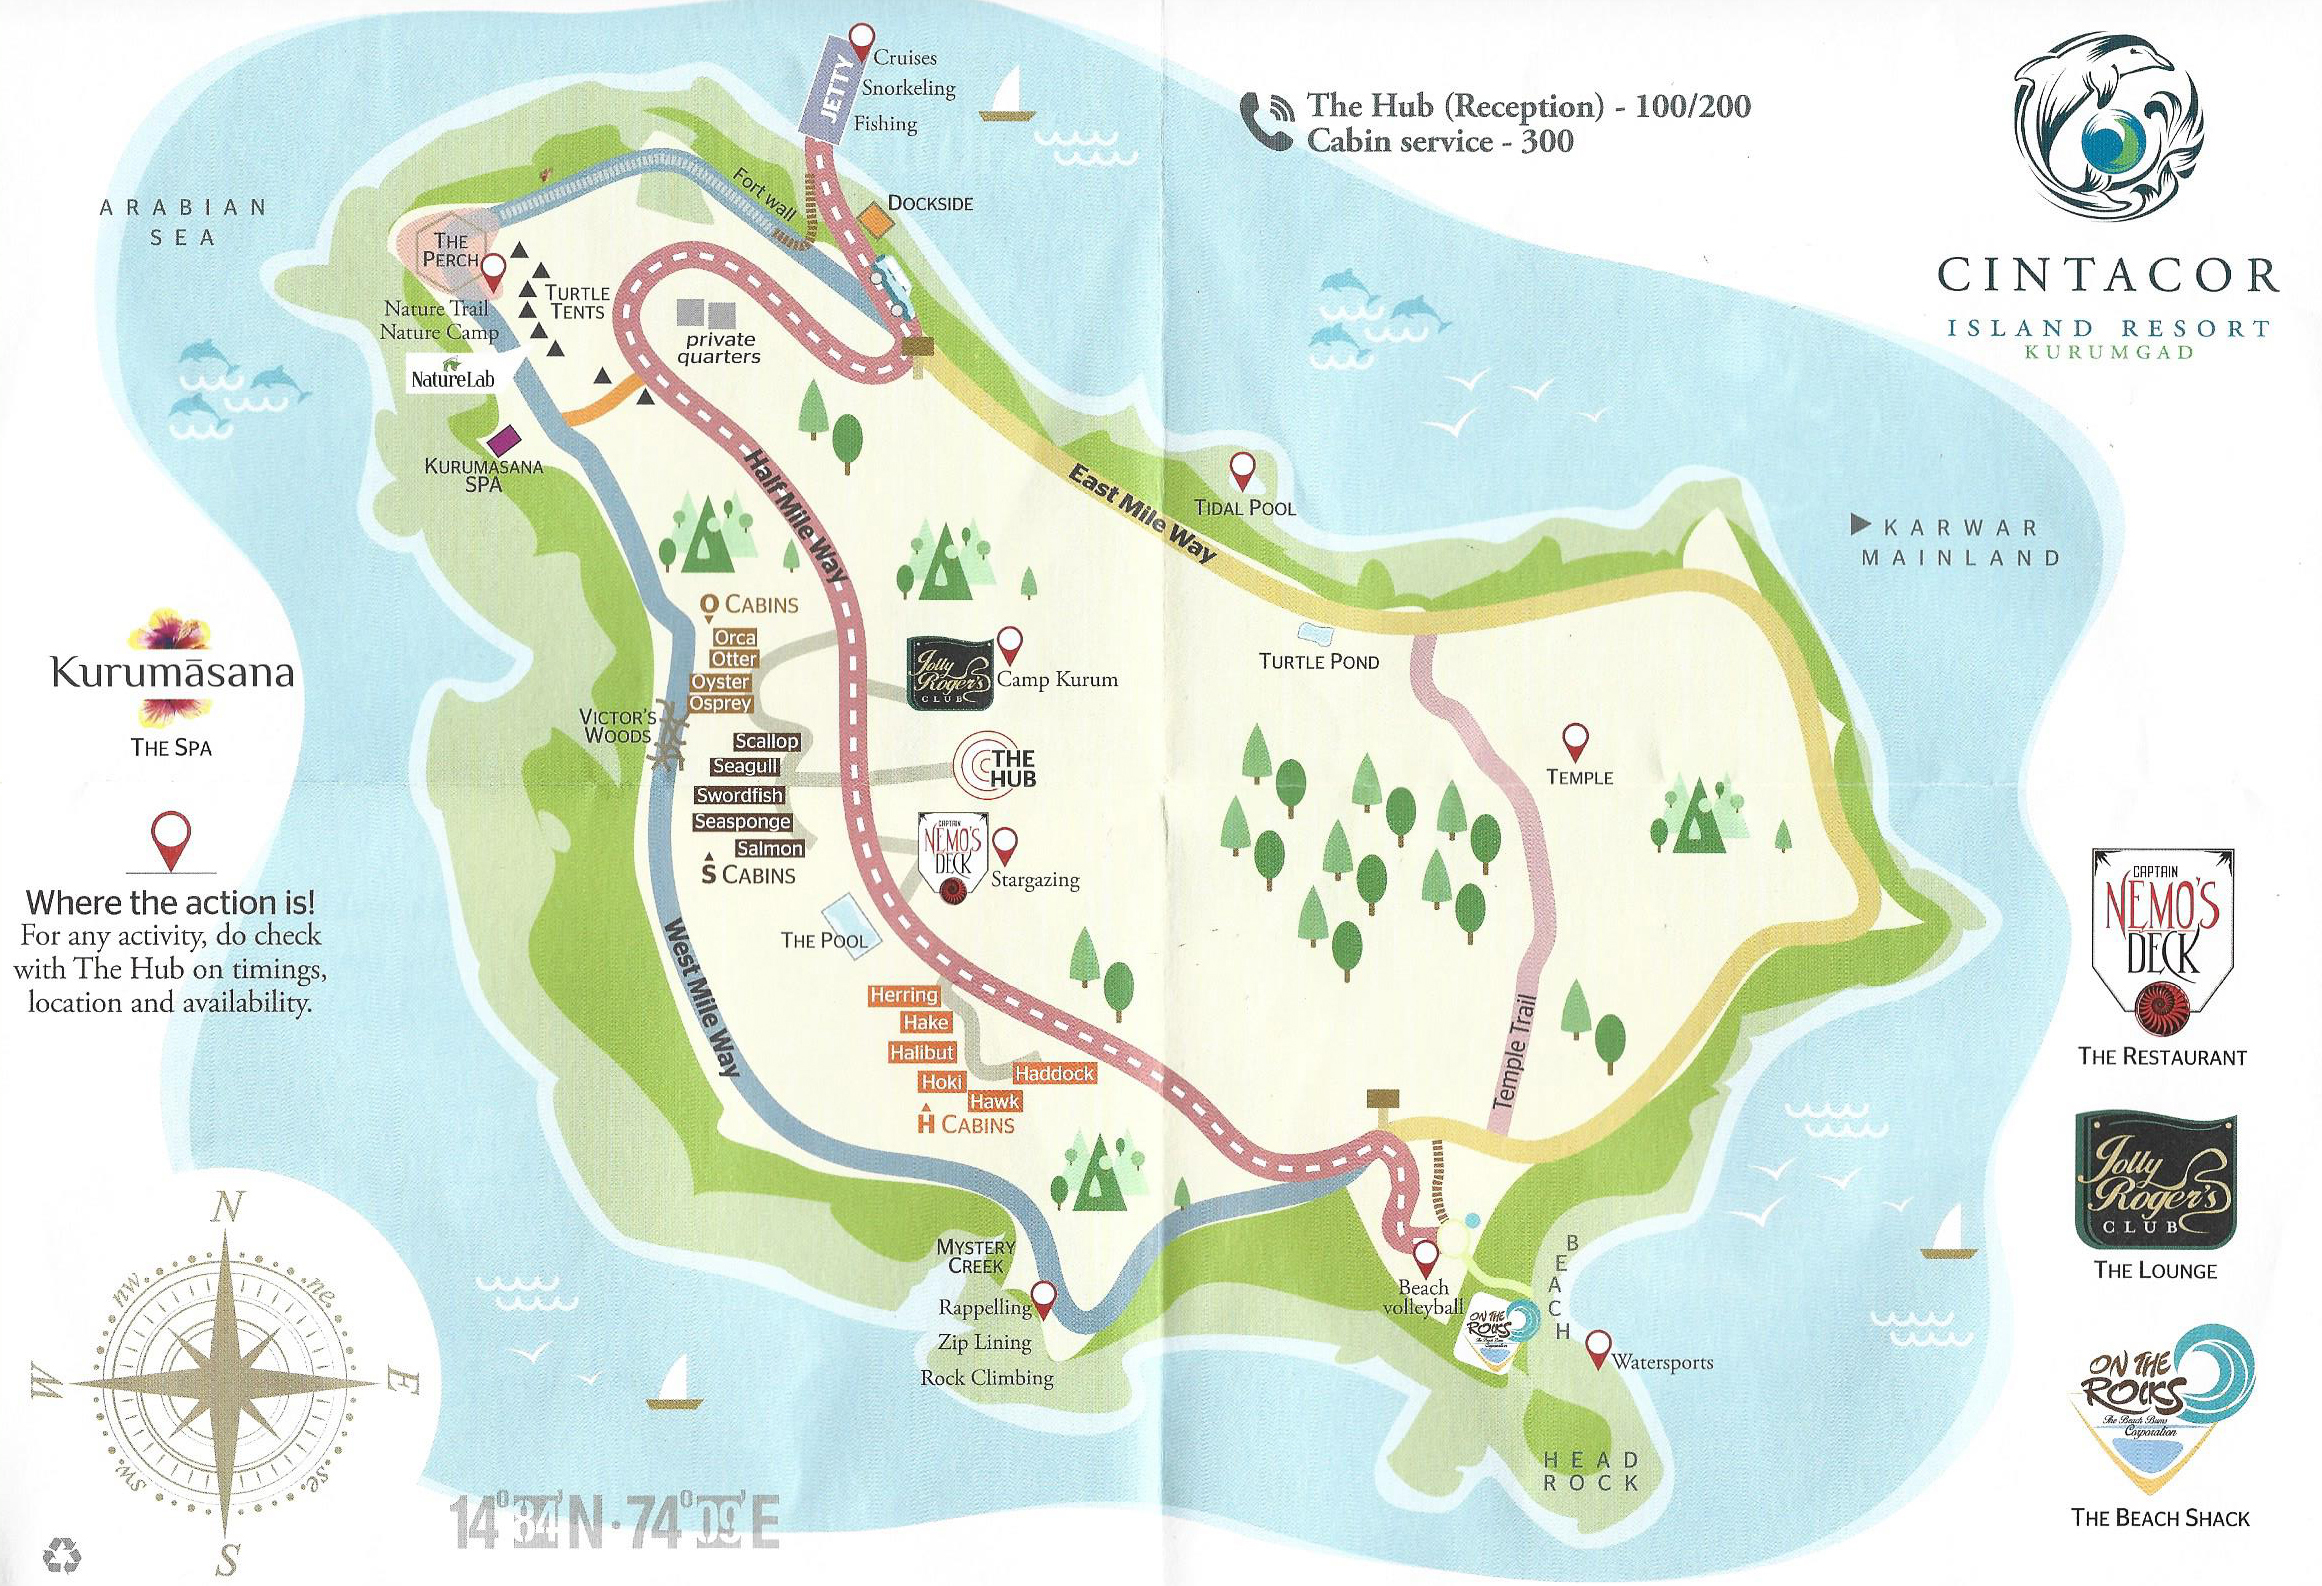 Map of Cintacor Island Resort